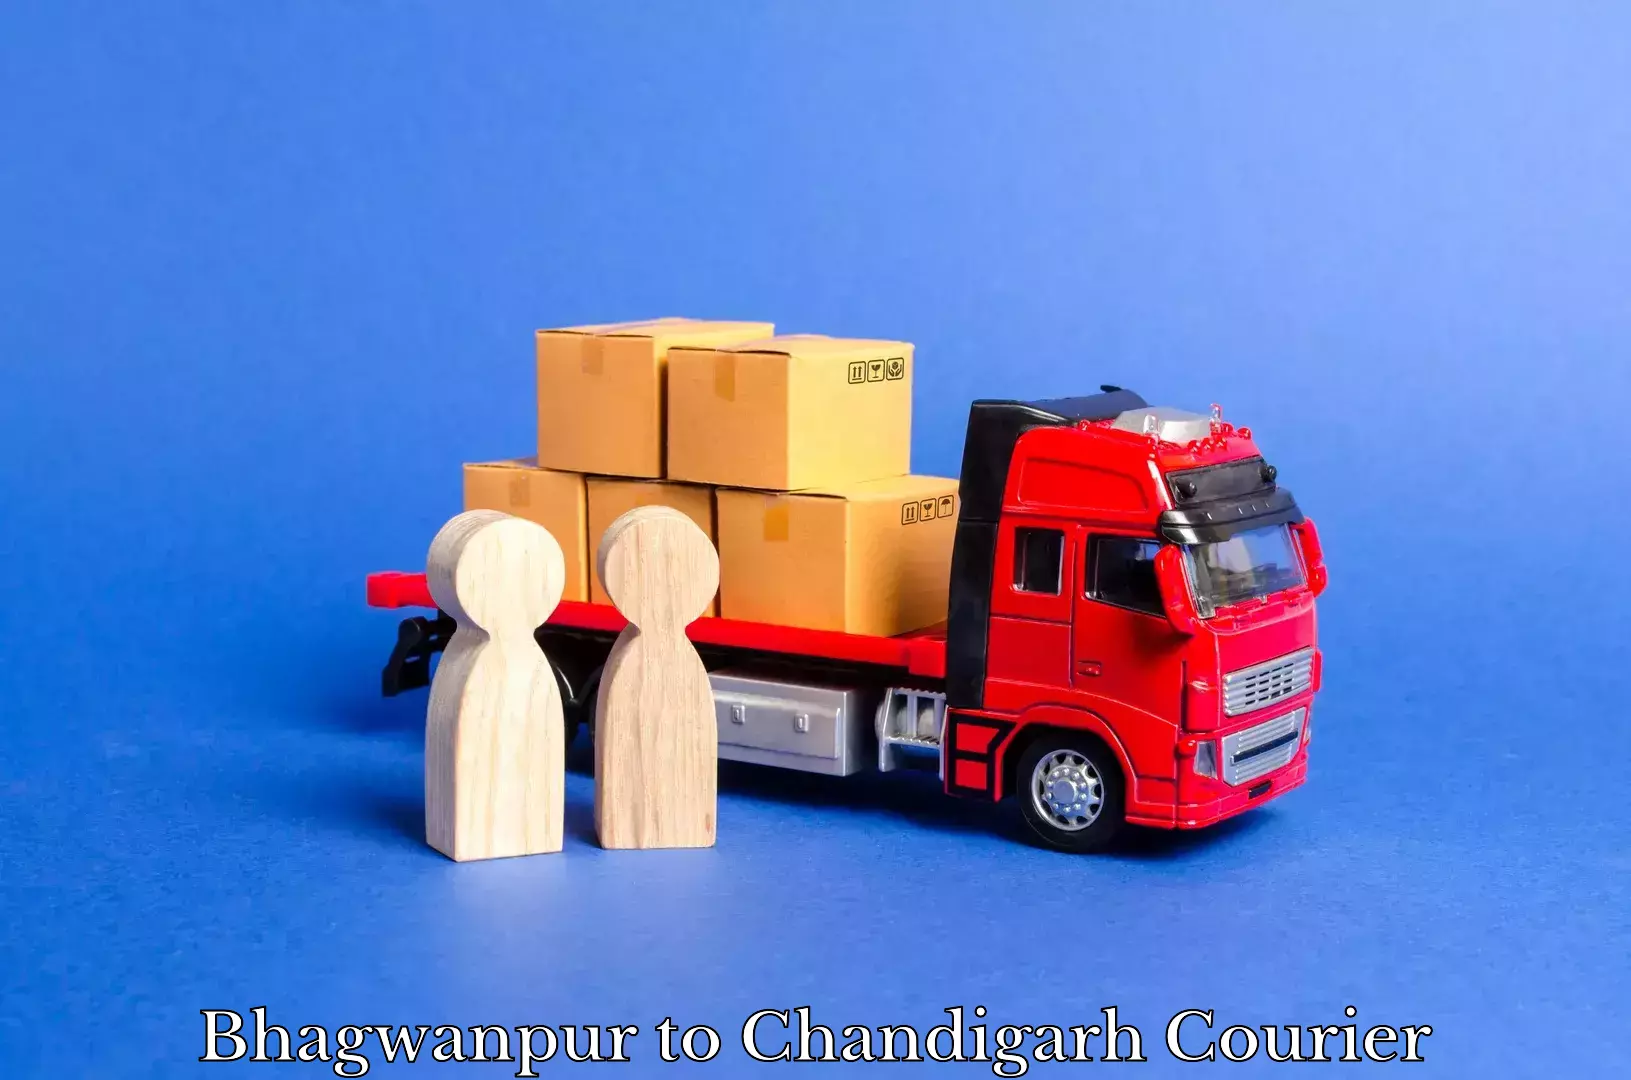 User-friendly courier app Bhagwanpur to Chandigarh